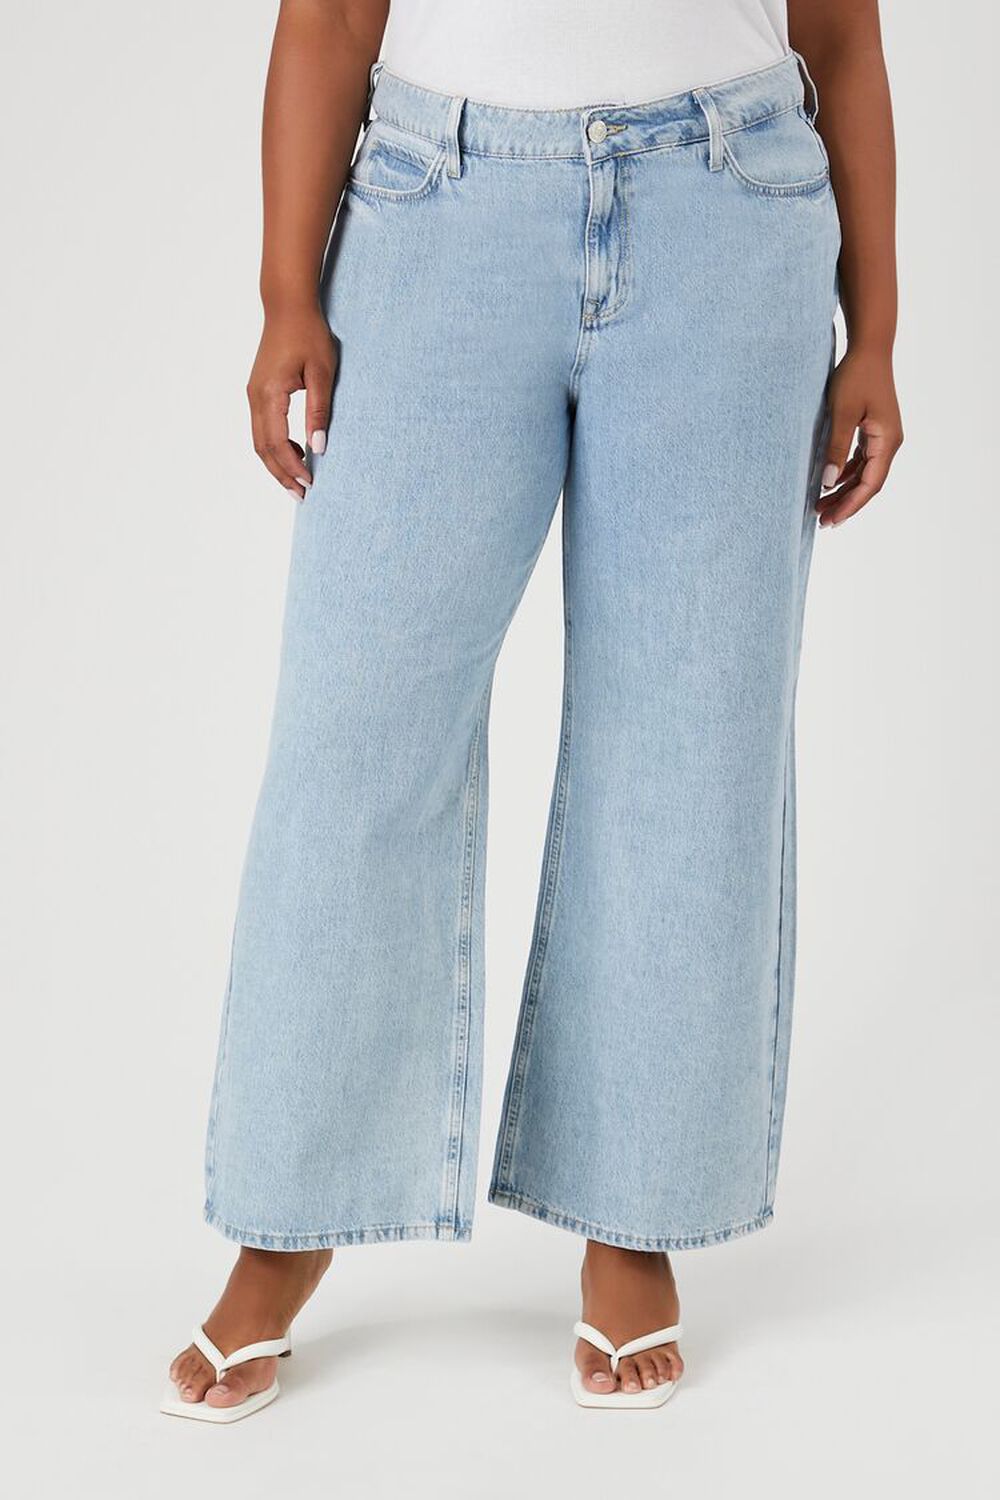 Jeans for Women Elastic Waist Jeans Jeans Mid Rise Jeans Plus Size